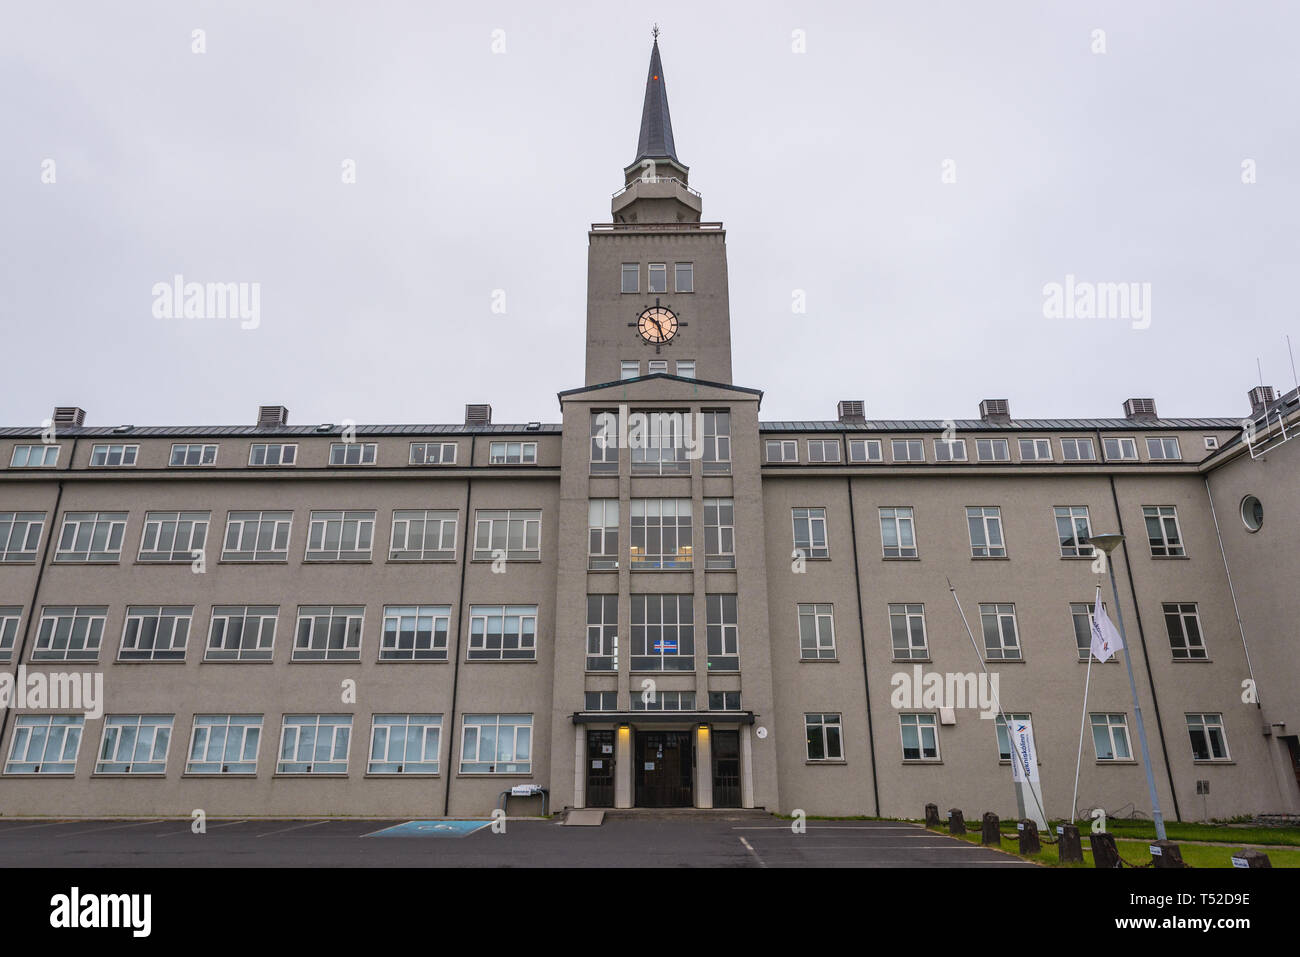 Taekniskolinn - Technical College of Reykjavik, capital city of Iceland Stock Photo